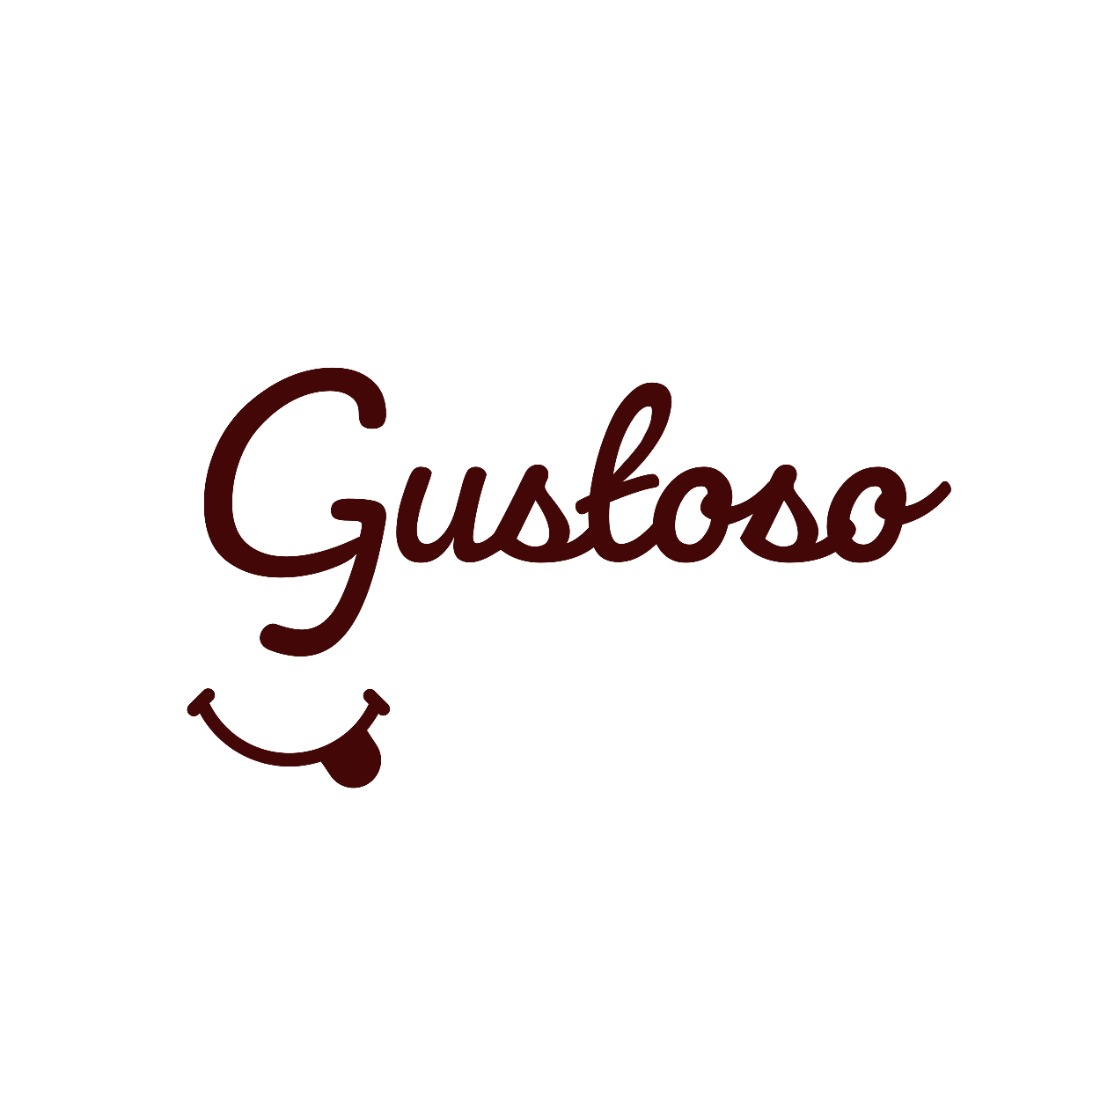 Gustoso - Restaurant Logo in brown color.